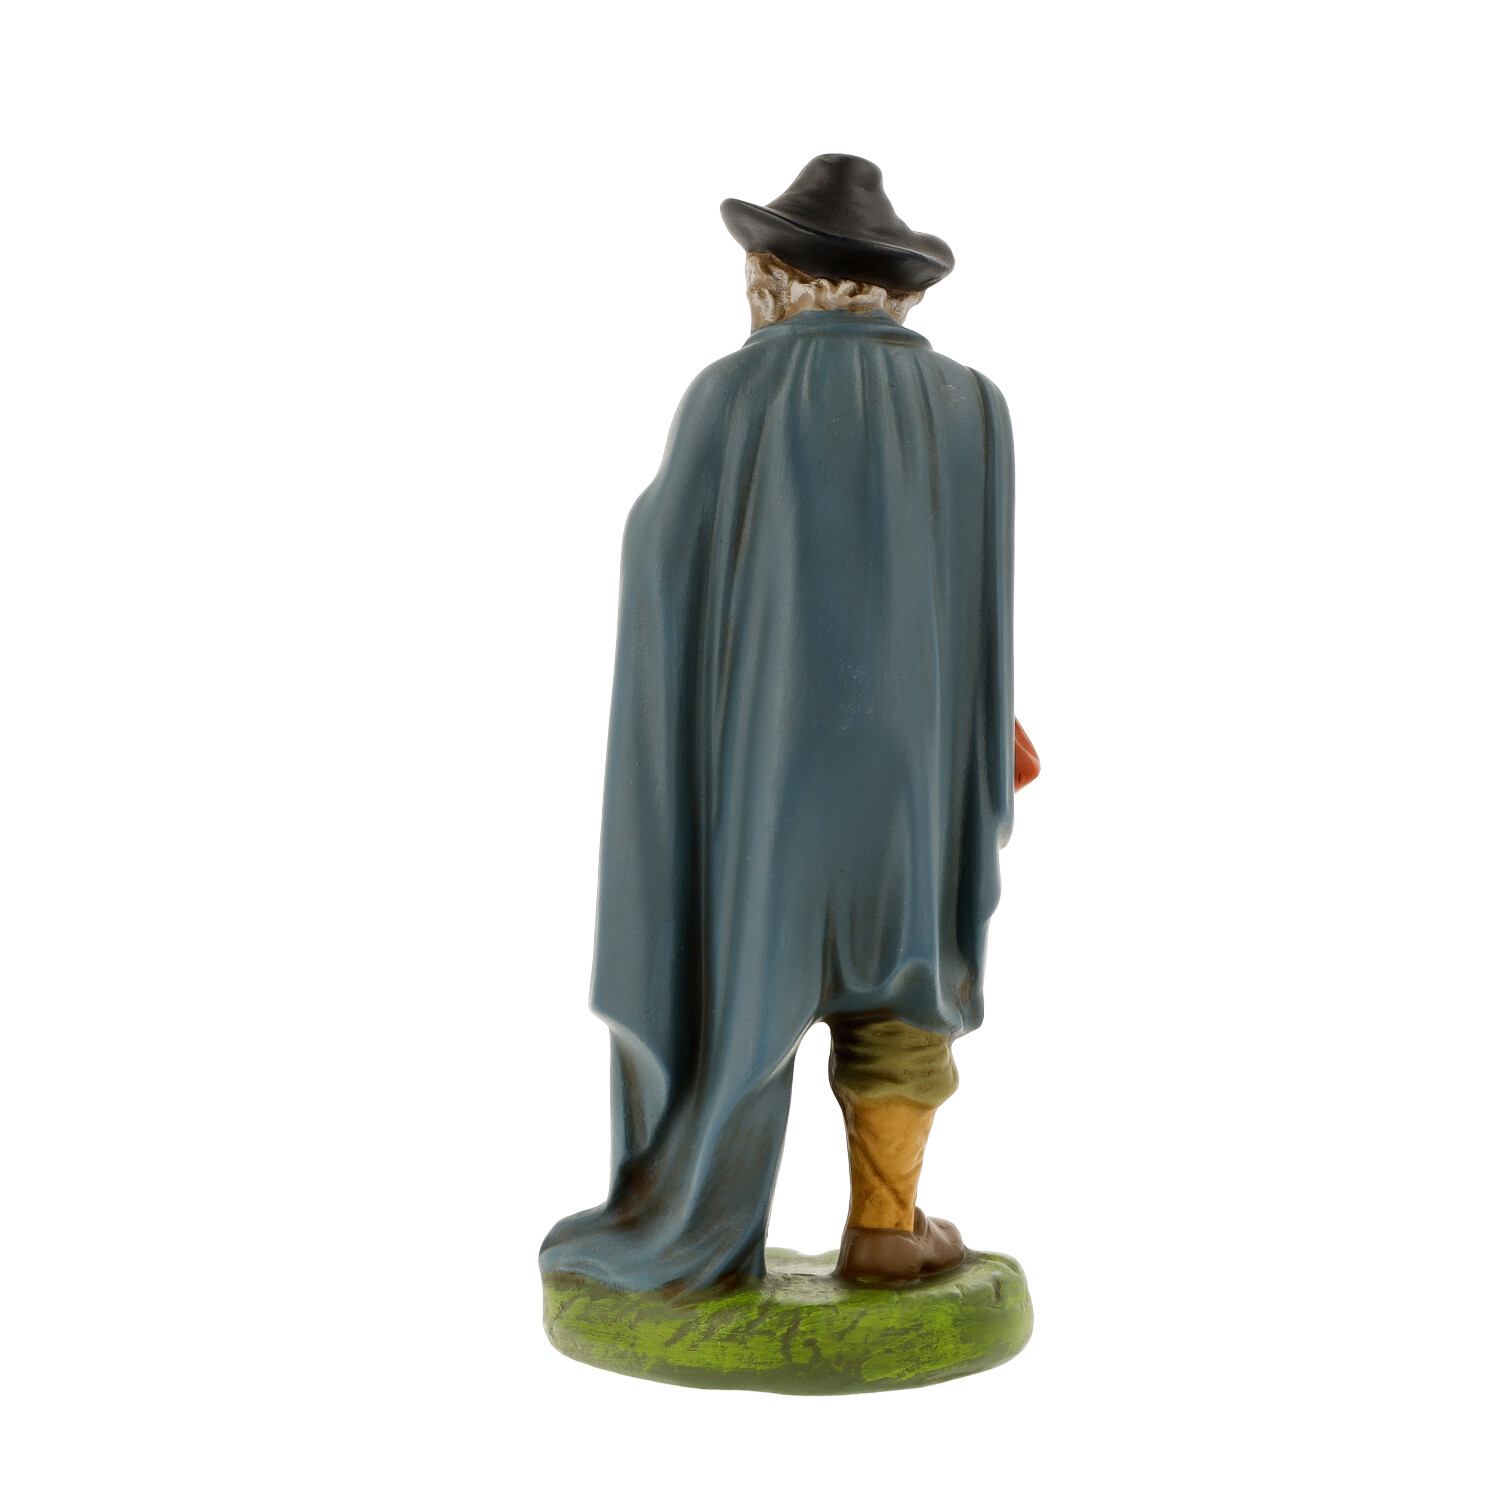 Shepherd, to 6.75 in. figures - Marolin Nativity figure - made in Germany